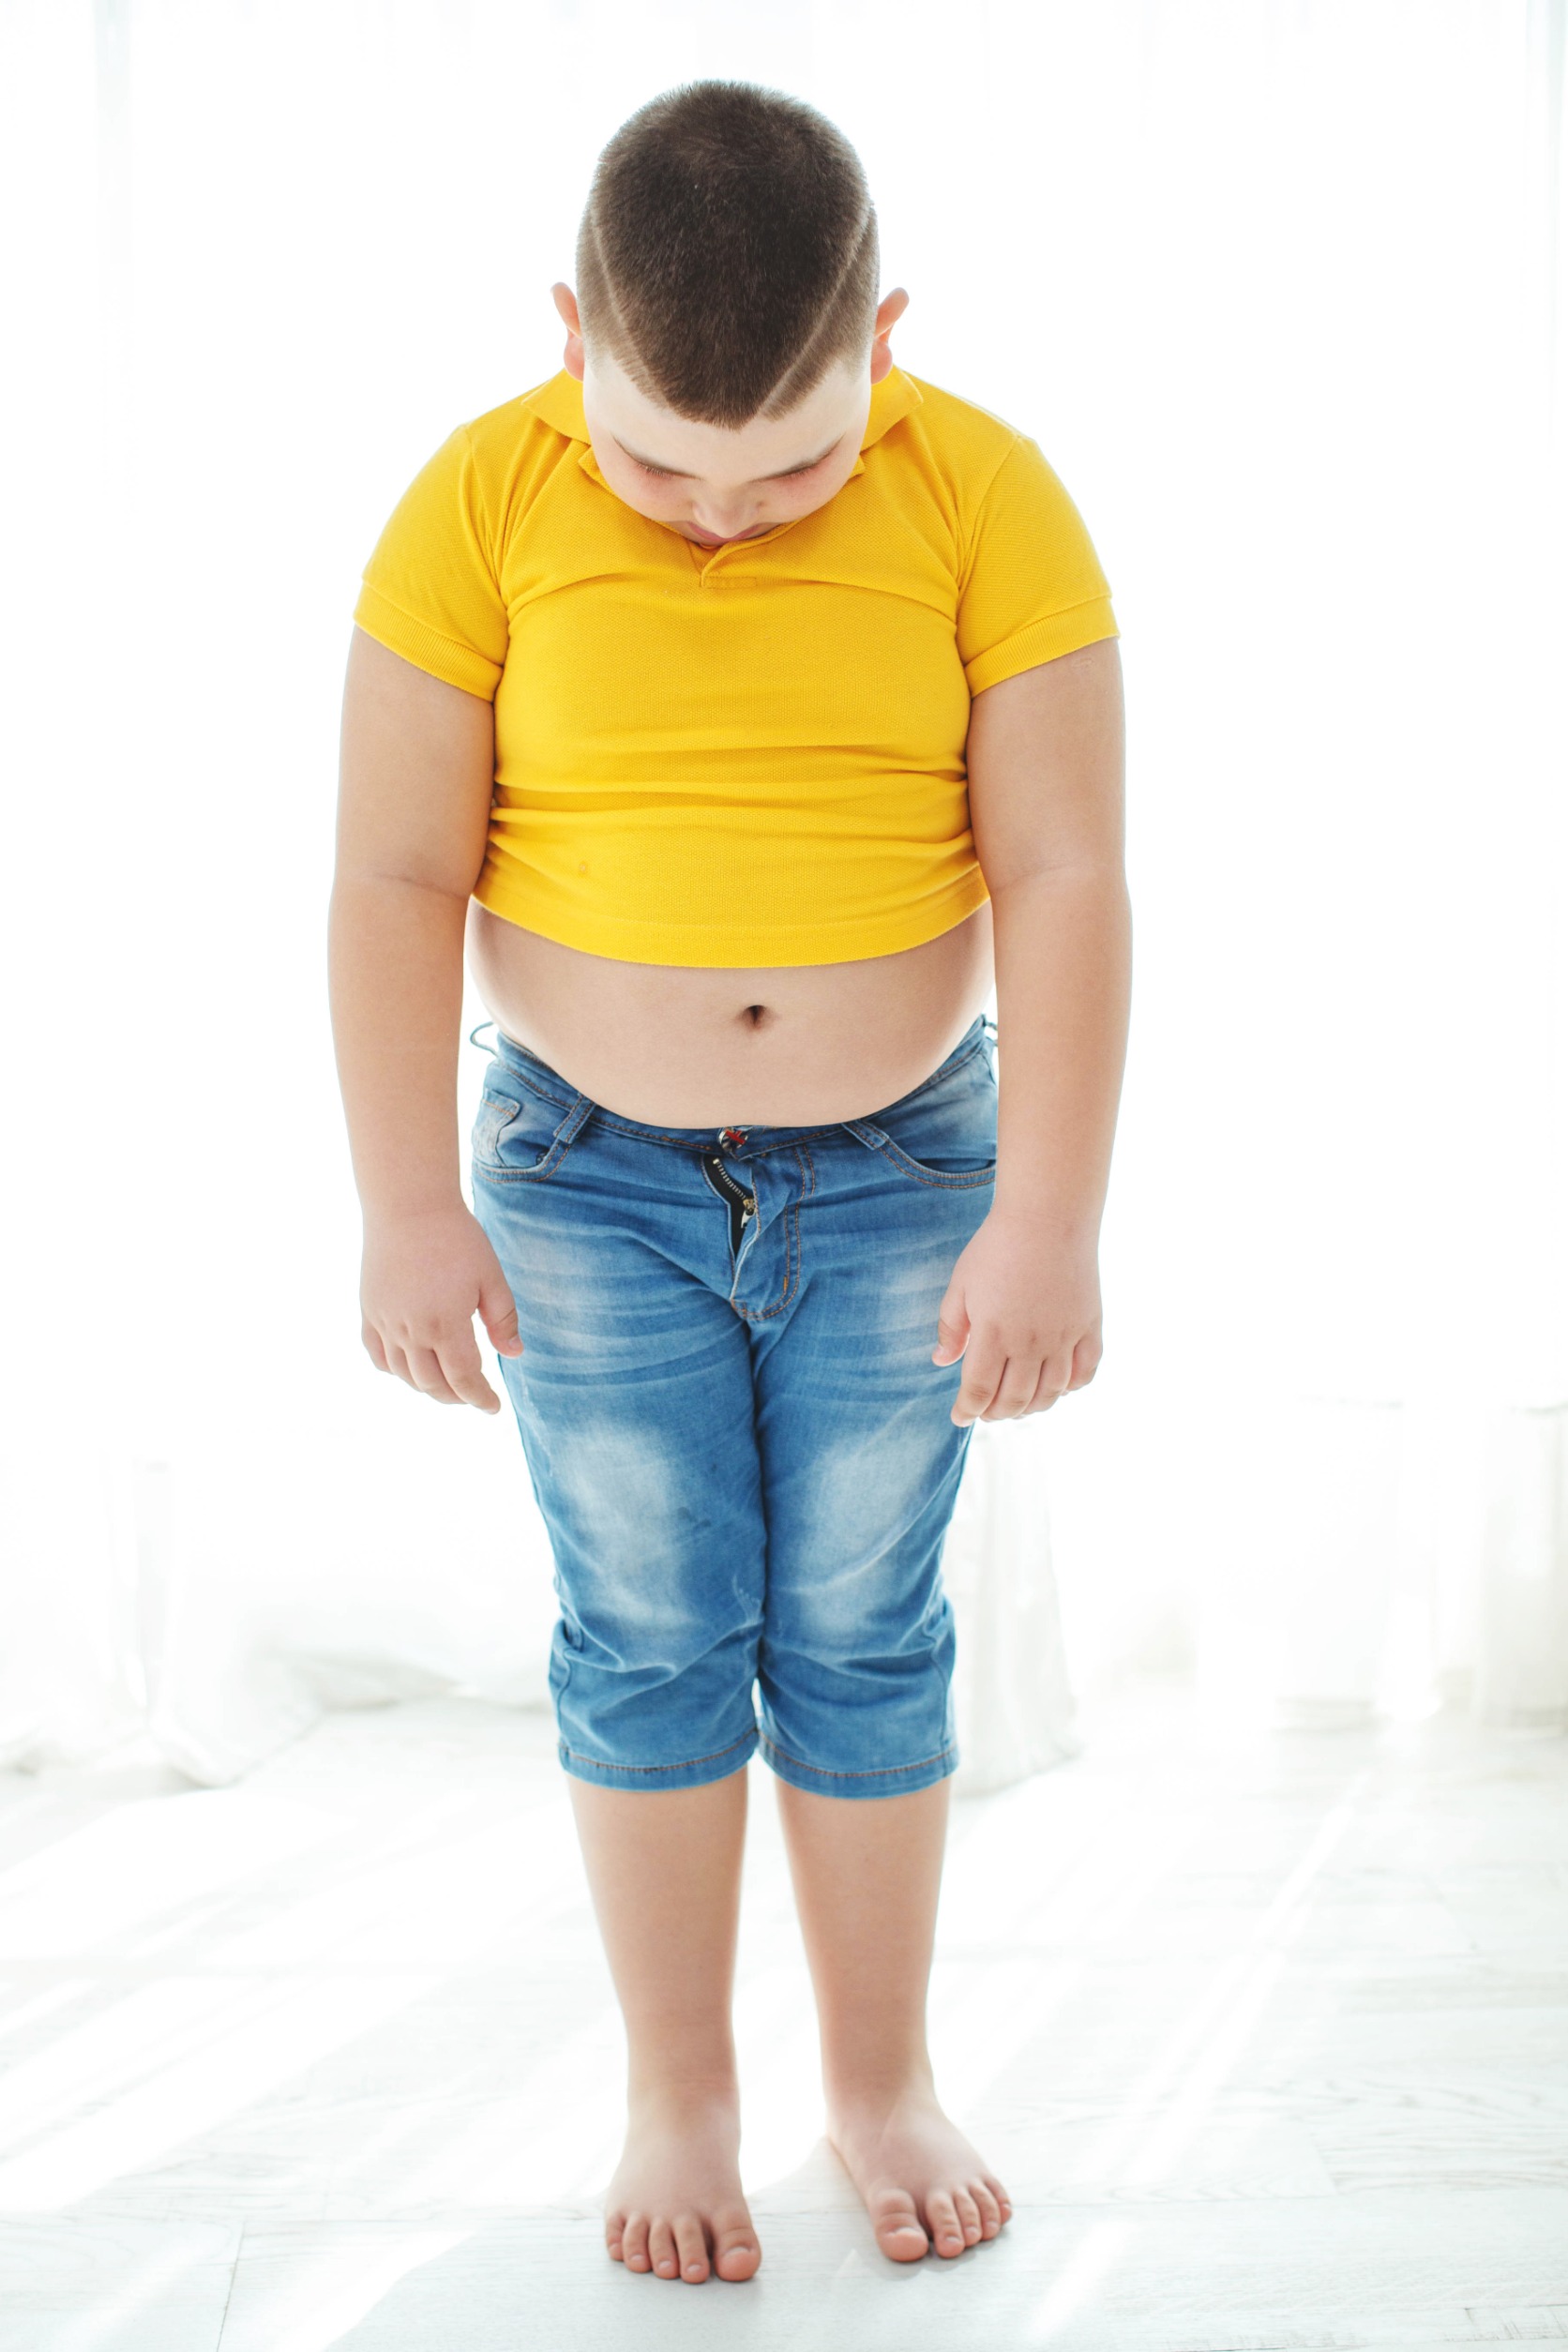 risks of childhood obesity